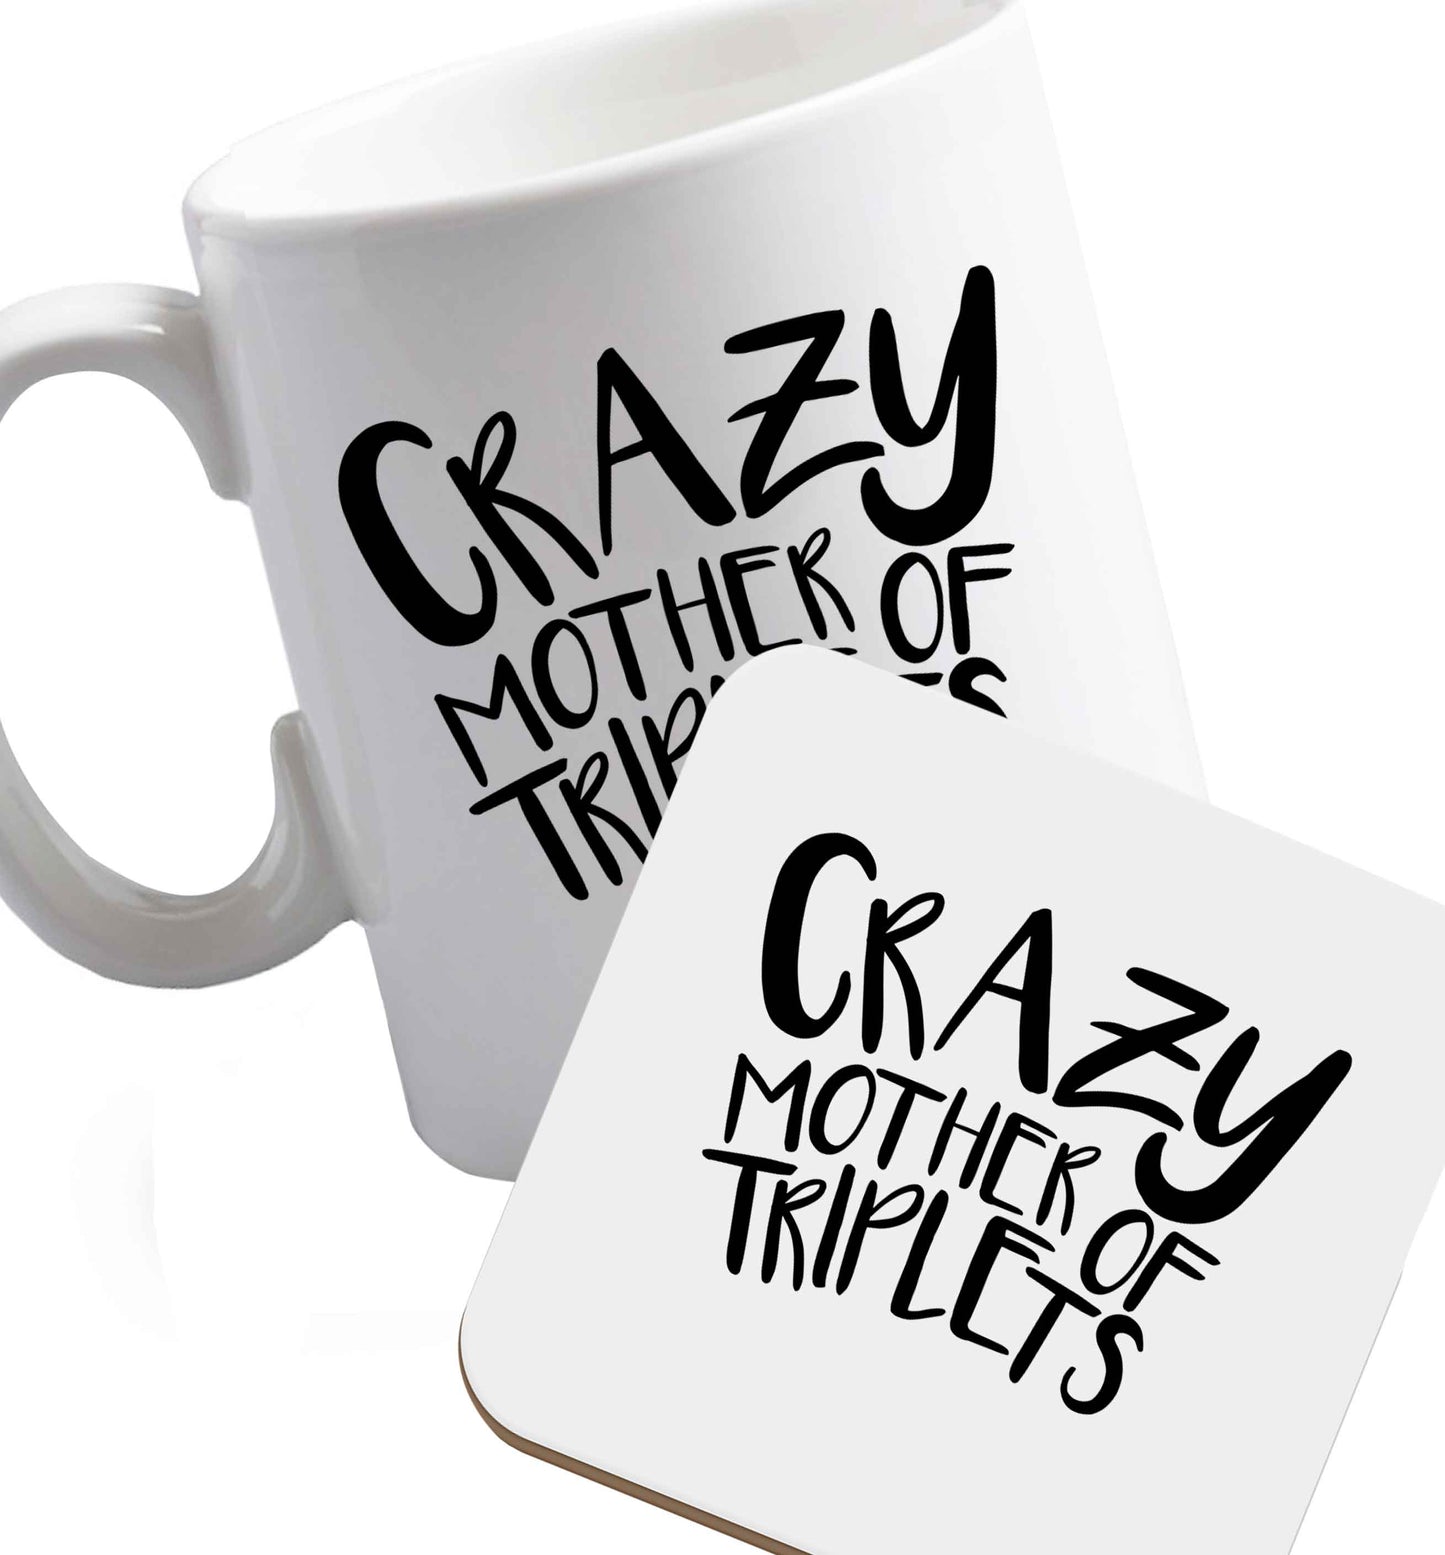 10 oz Crazy mother of triplets ceramic mug and coaster set right handed